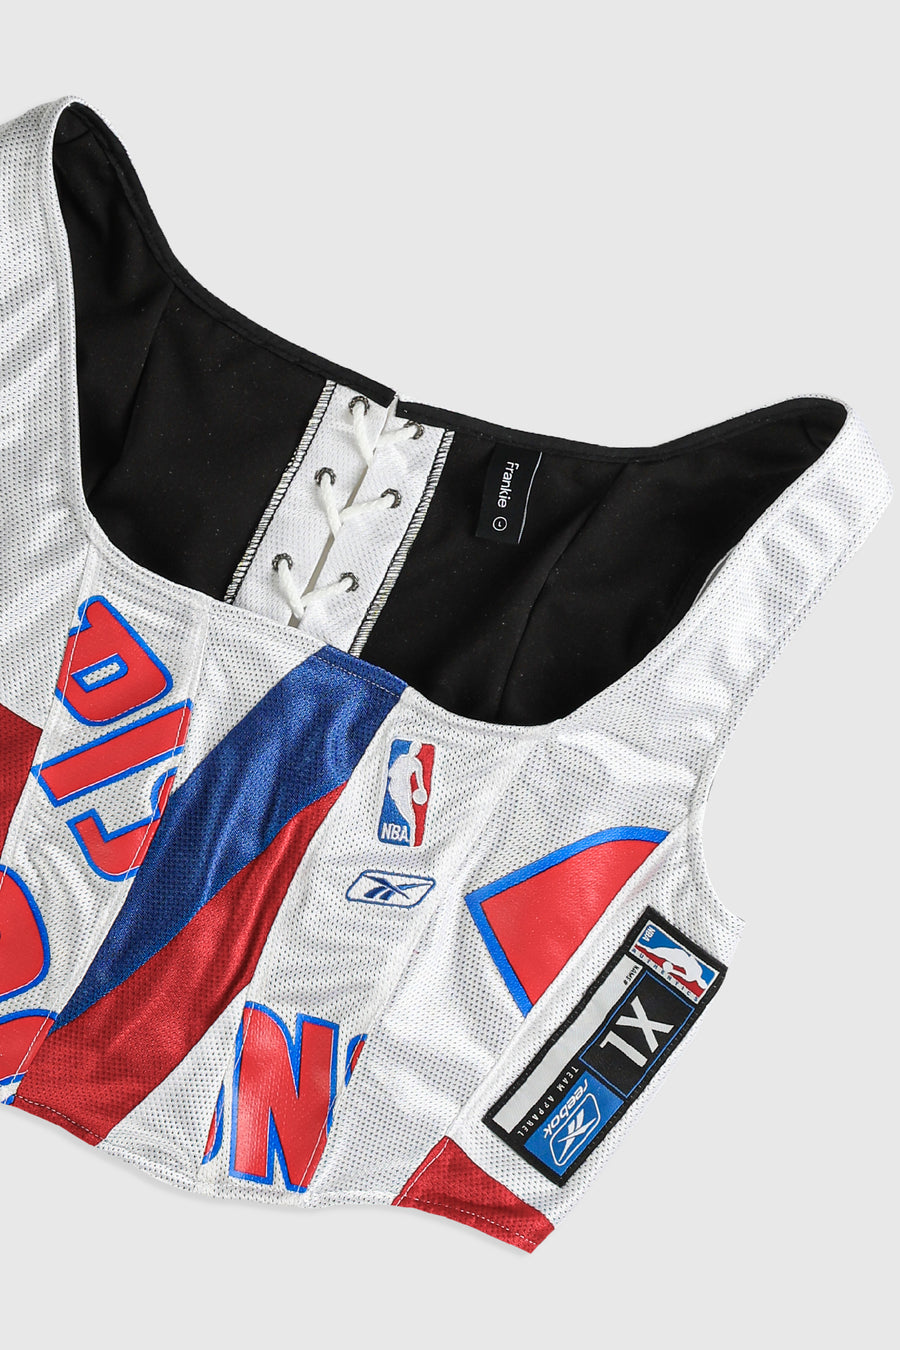 Rework Pistons NBA Corset - L